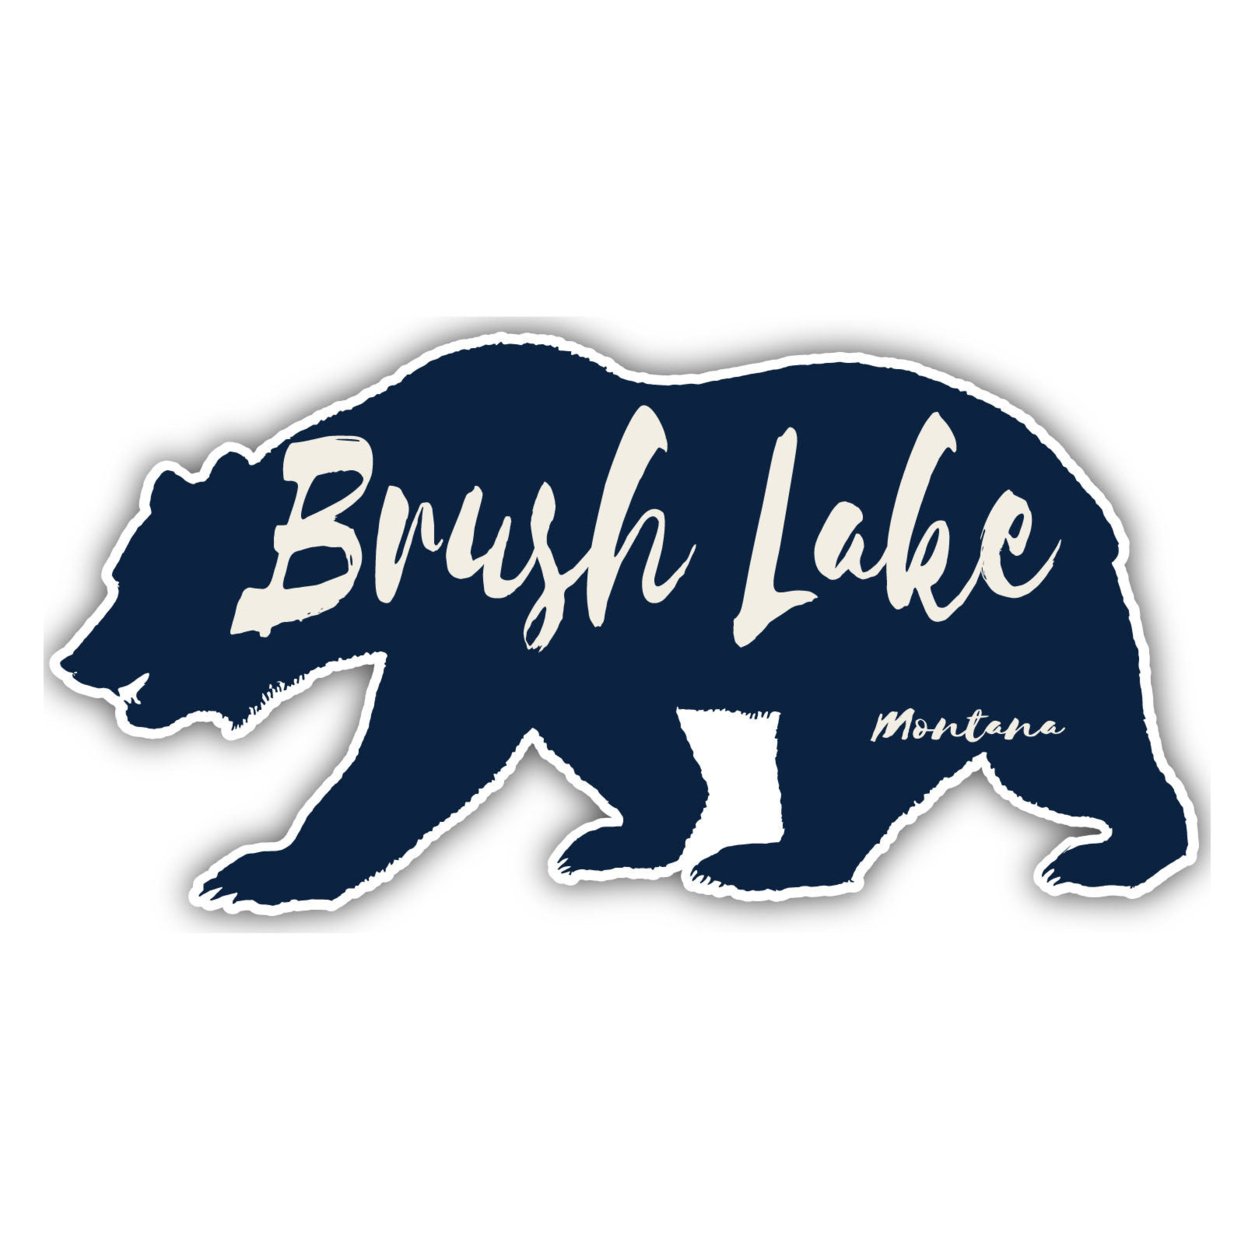 Brush Lake Montana Souvenir Decorative Stickers (Choose Theme And Size) - 4-Pack, 8-Inch, Bear